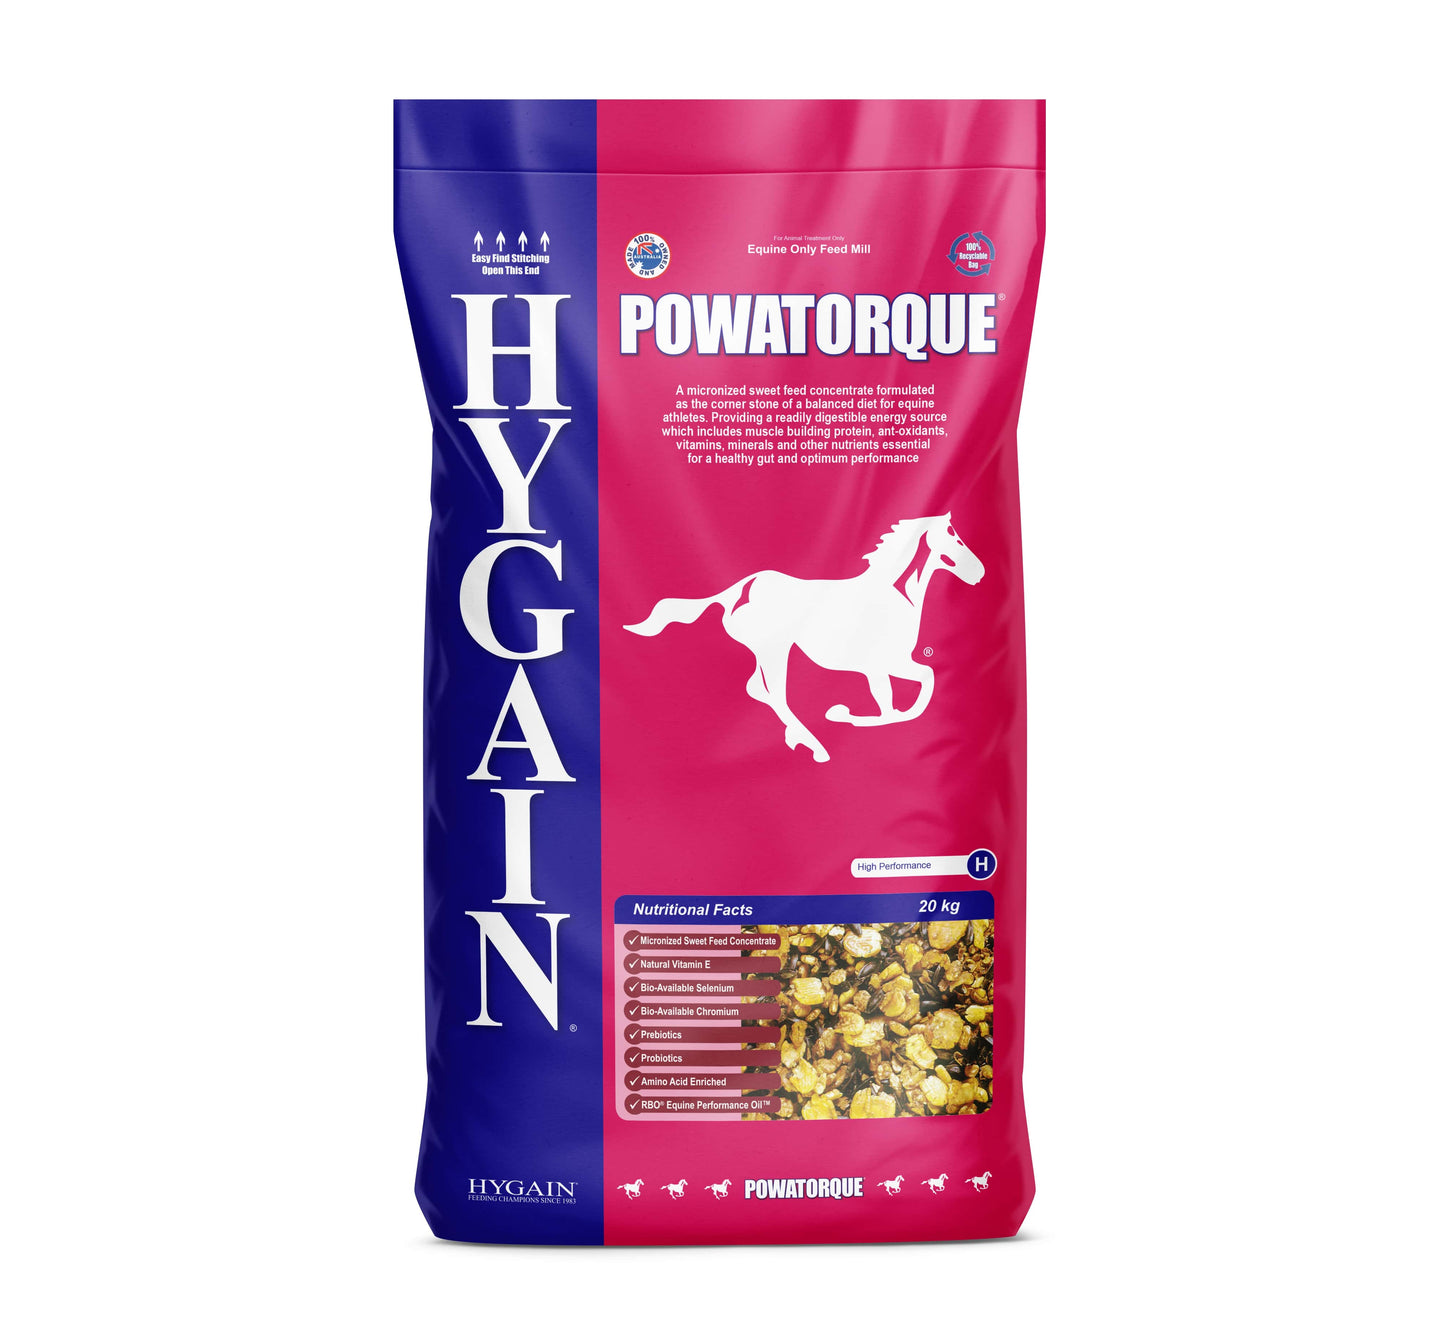 Hygain Powatorque Horse Feed